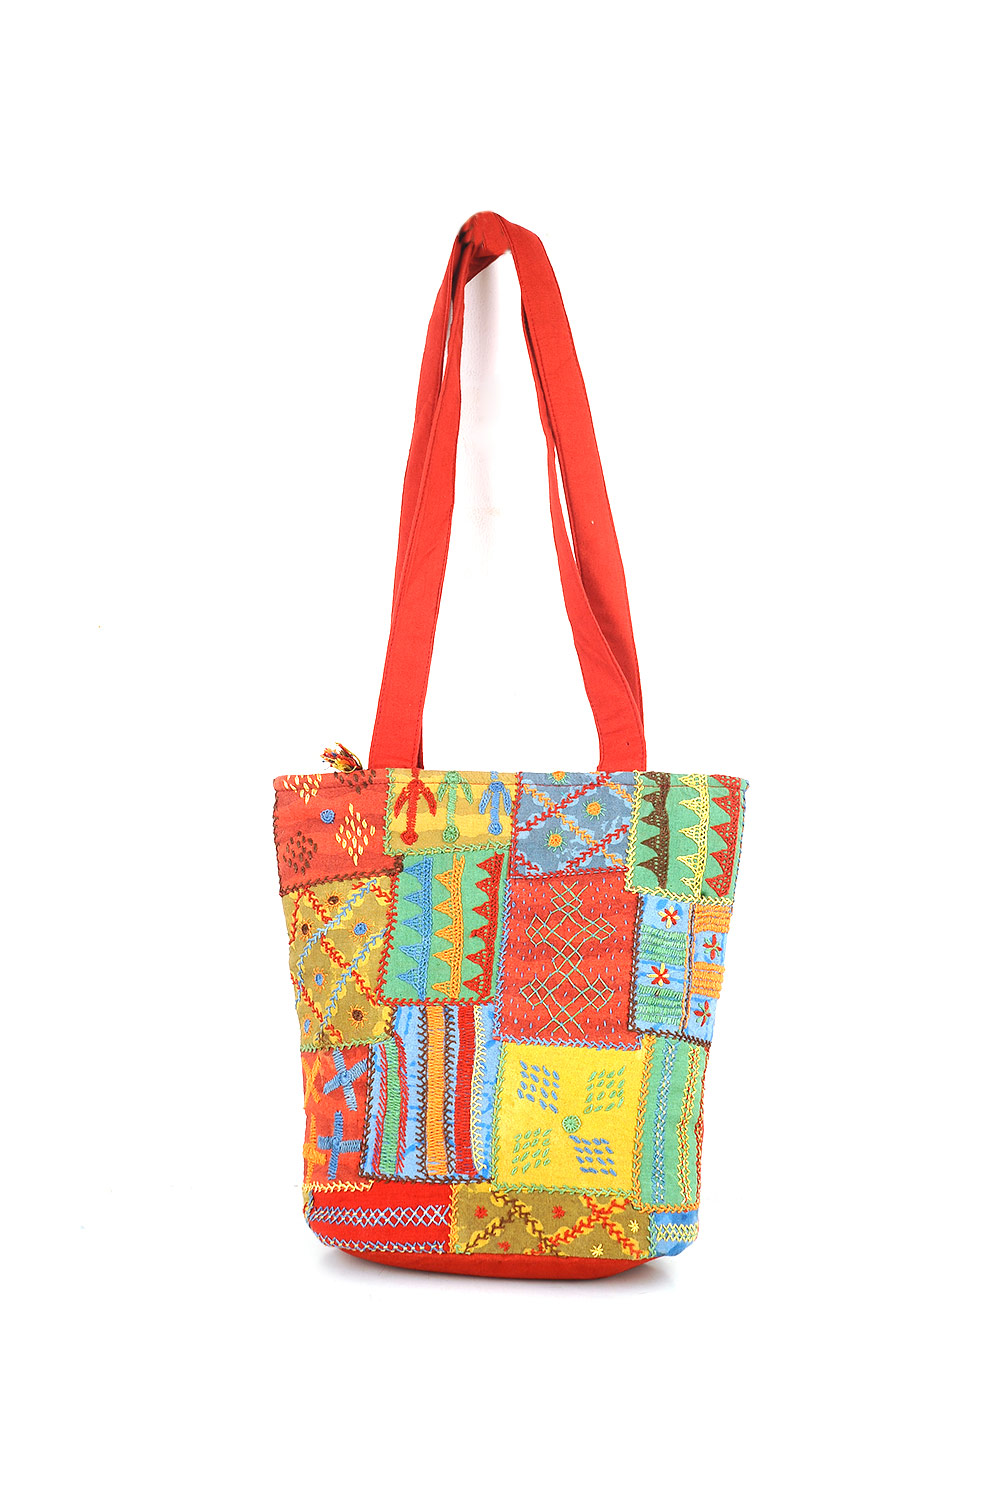 traditional gujarati kutch embroidery handbags-boho hippie| Alibaba.com